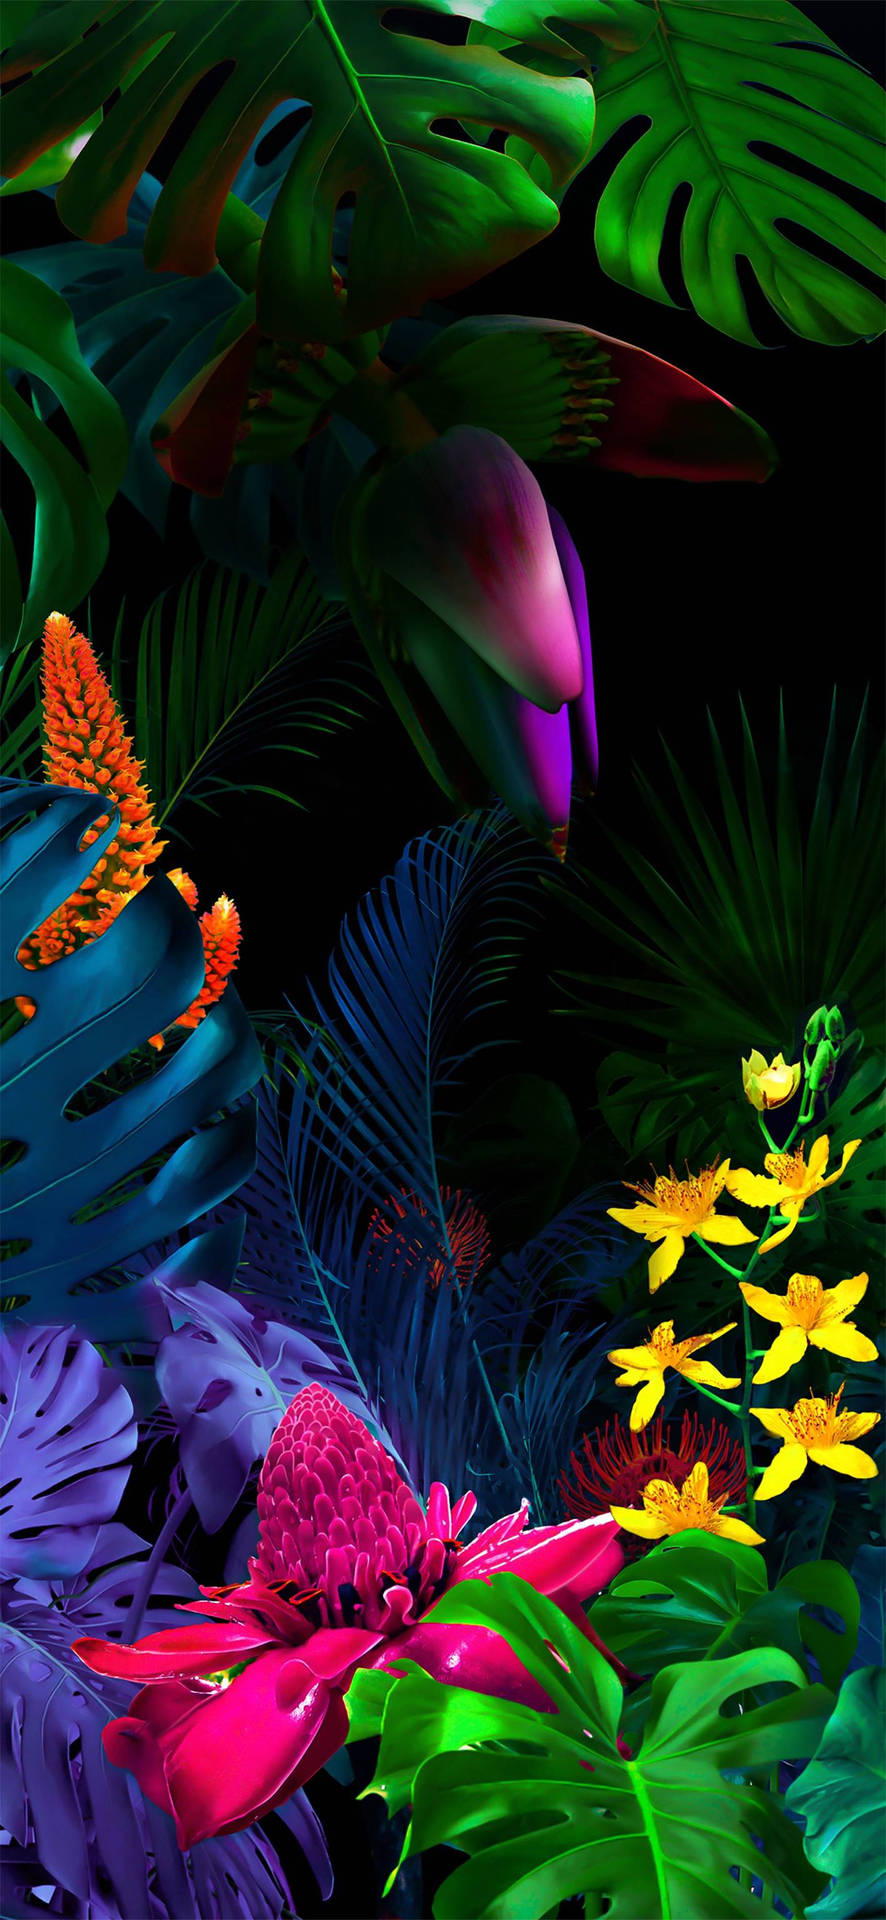 Artistic Digital Flower Display on an LG Phone Wallpaper